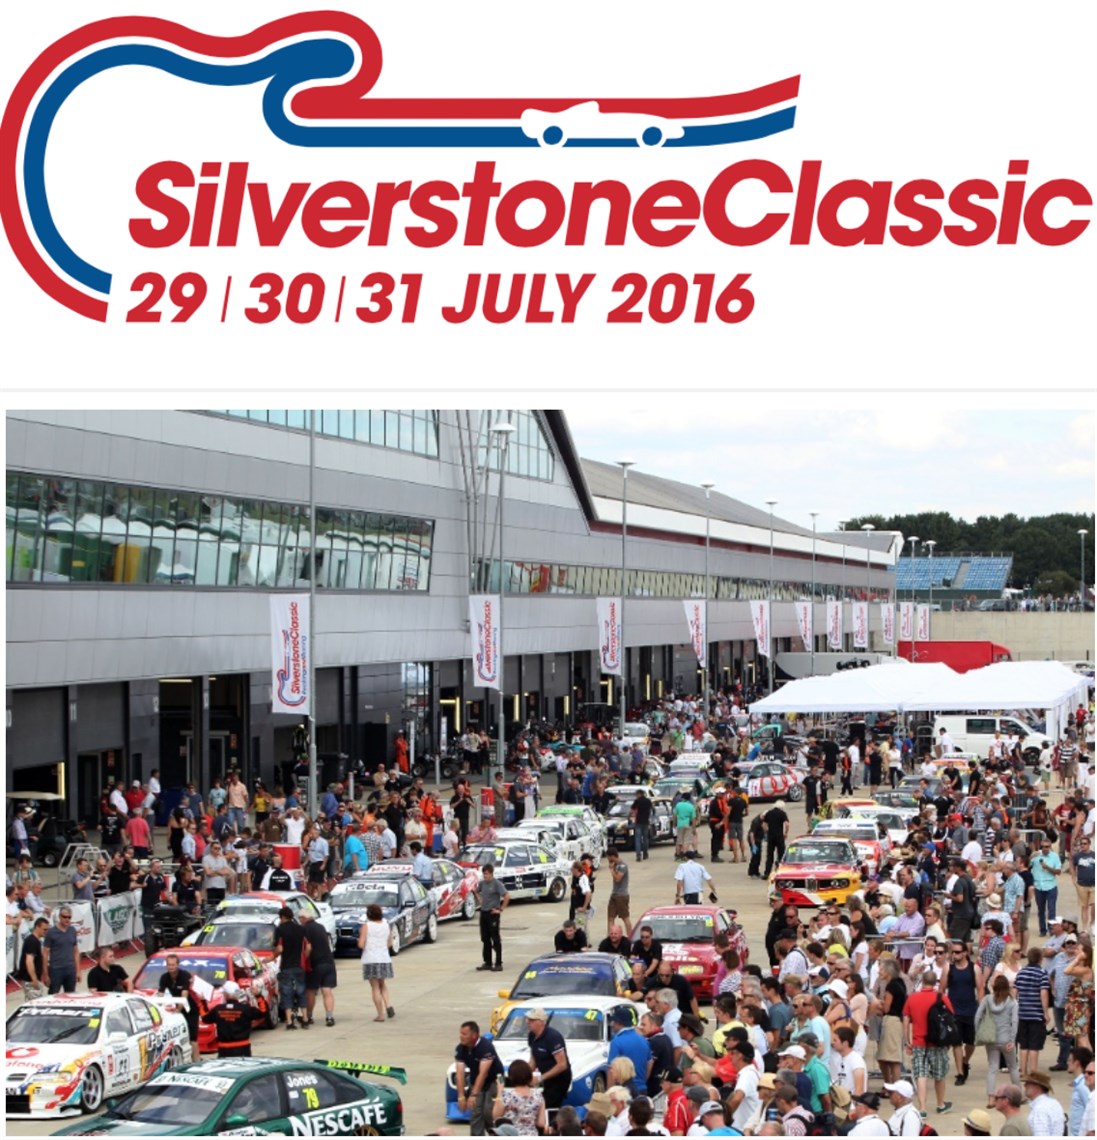 silverstone-classic-2016-2016-07-28.jpg